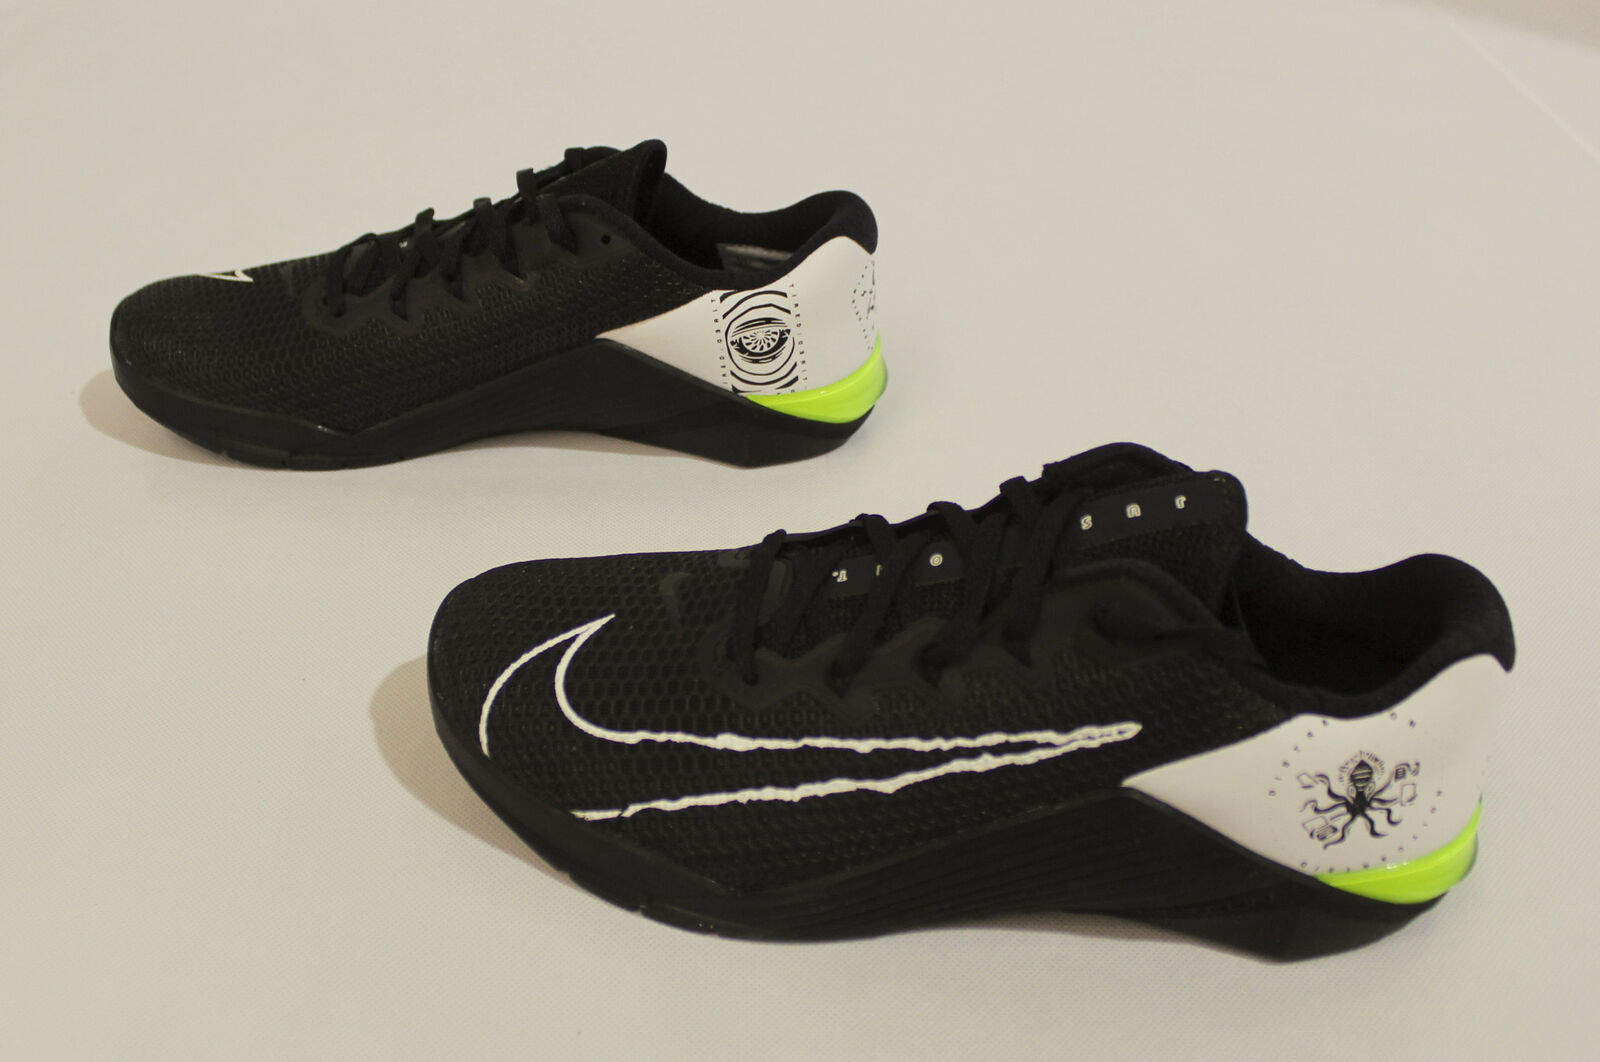 Nike Unisex Adult's Metcon 5 Shoes JQ2 Black Volt AQ1189-007 Size M:8.5 W:10